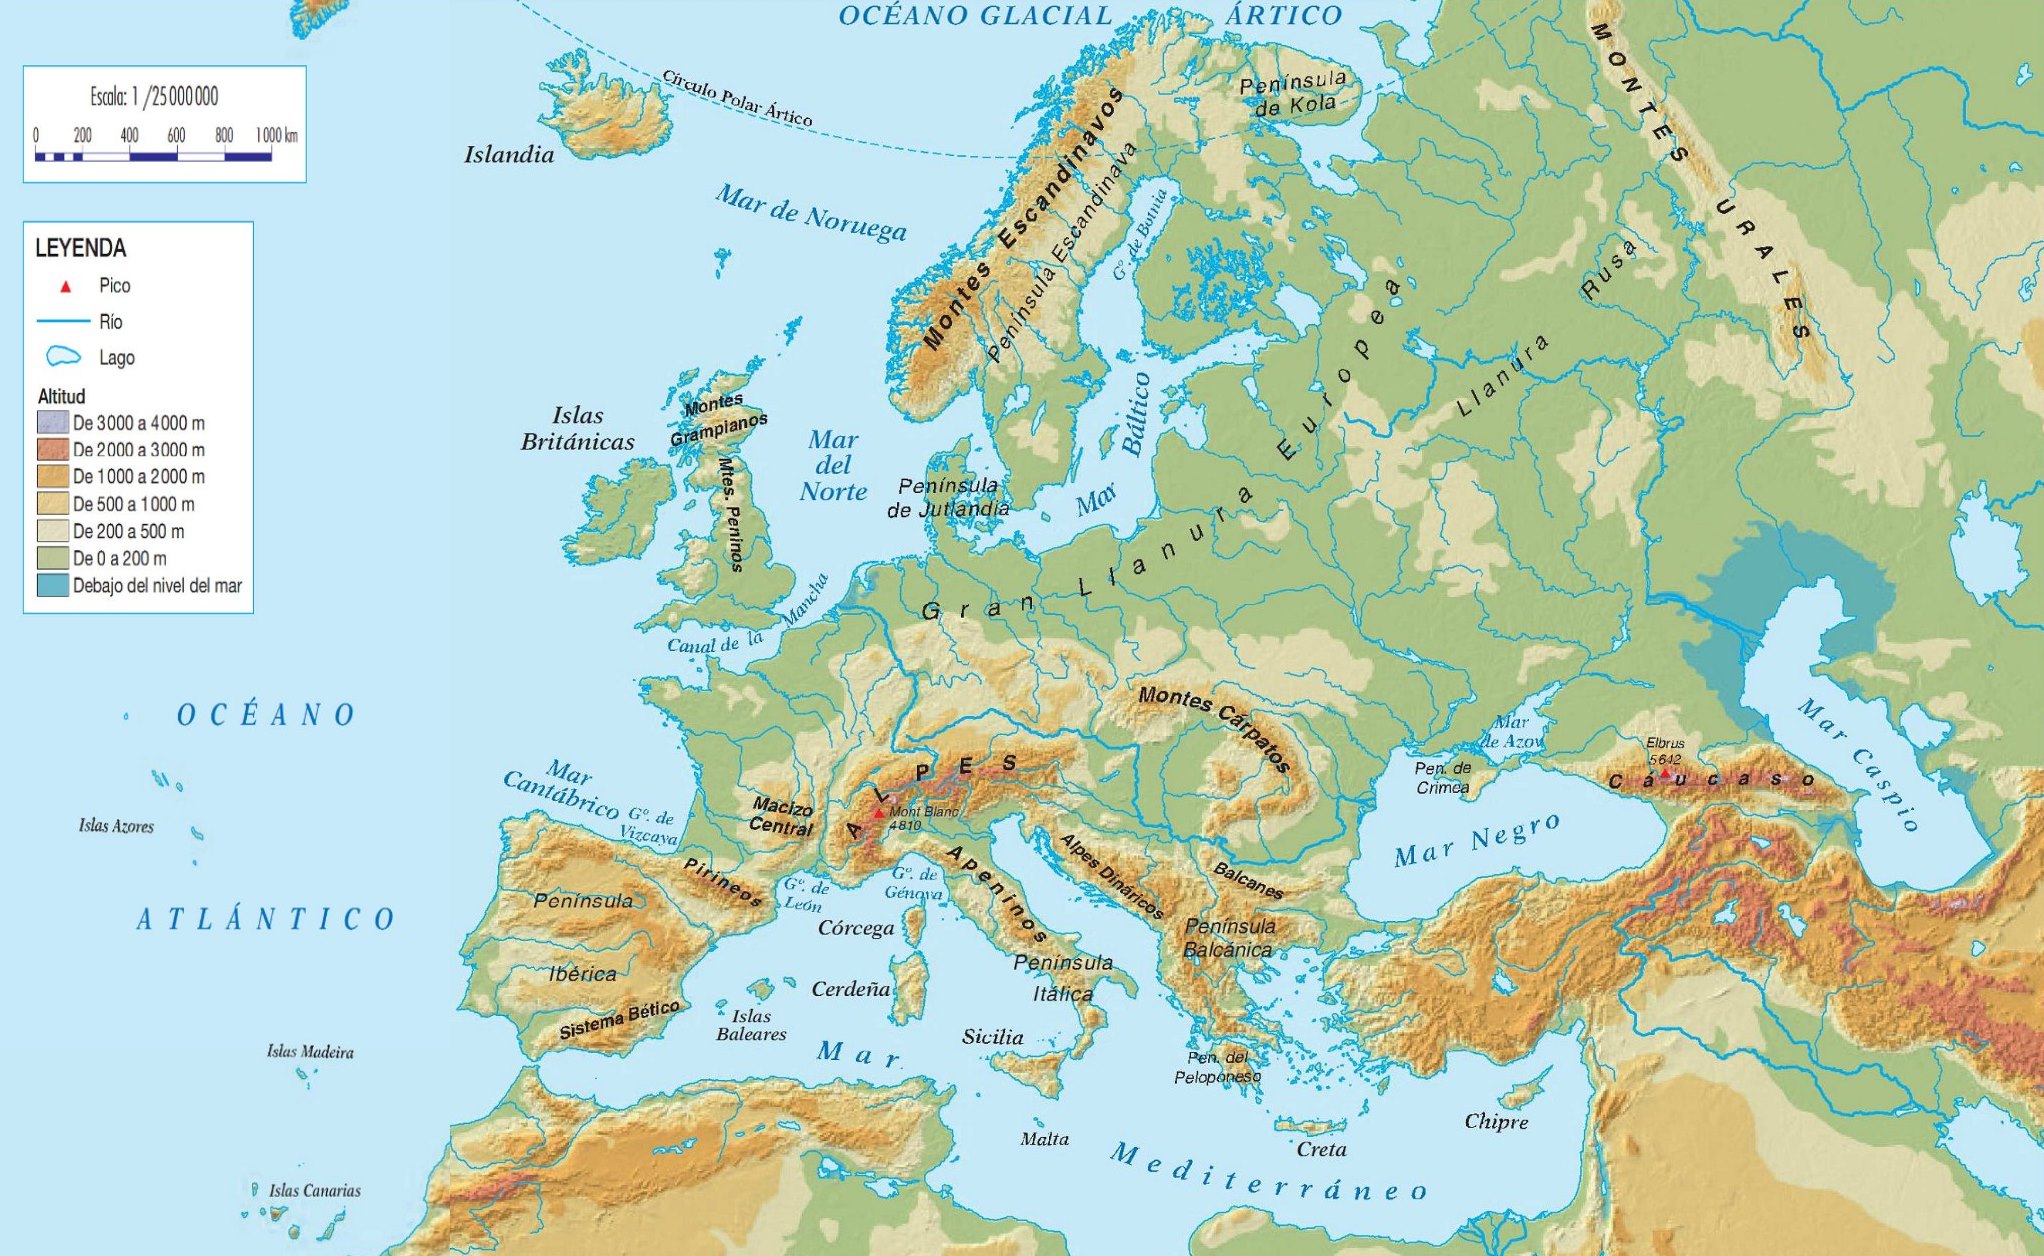 Mapa de relieve de Europa